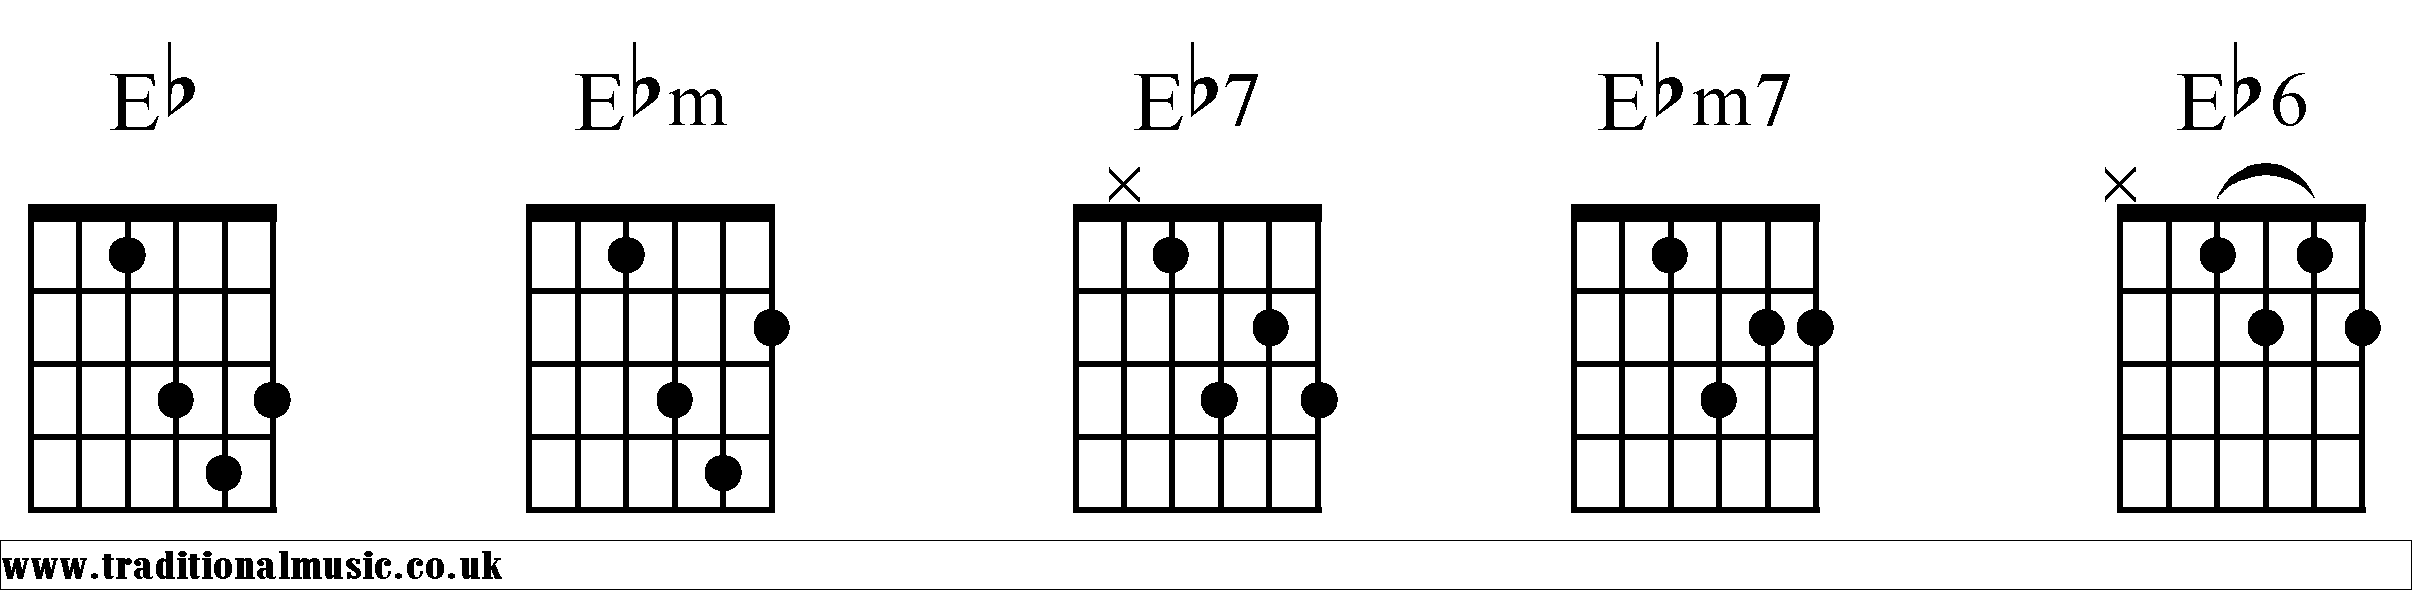 Eb Chords diagrams Guitar 1